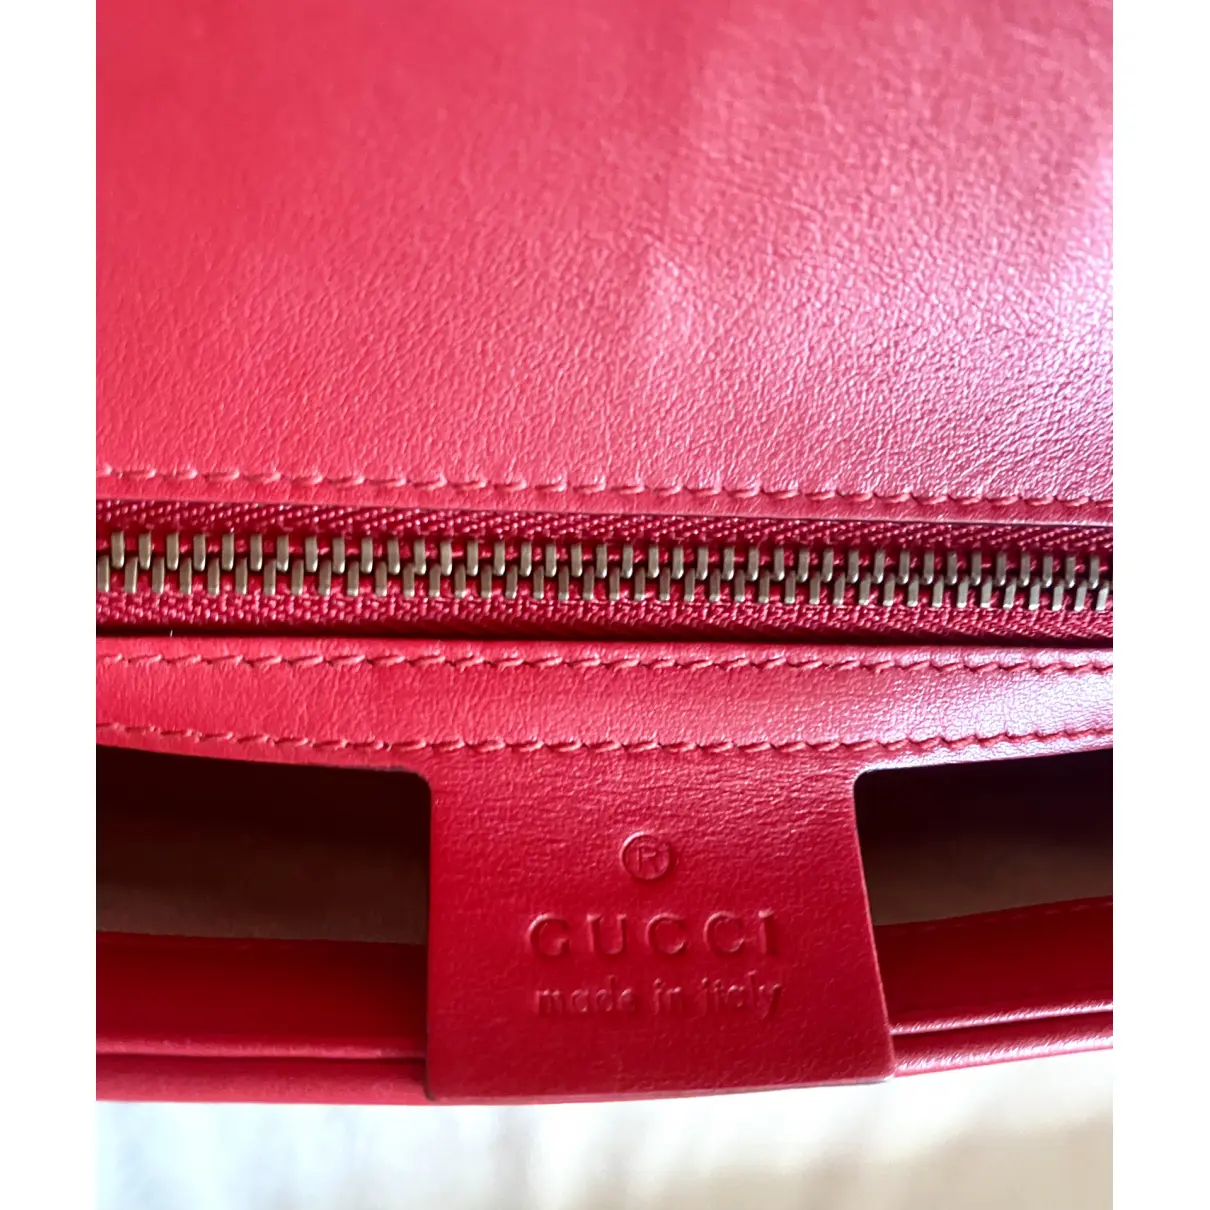 GG Marmont leather handbag Gucci